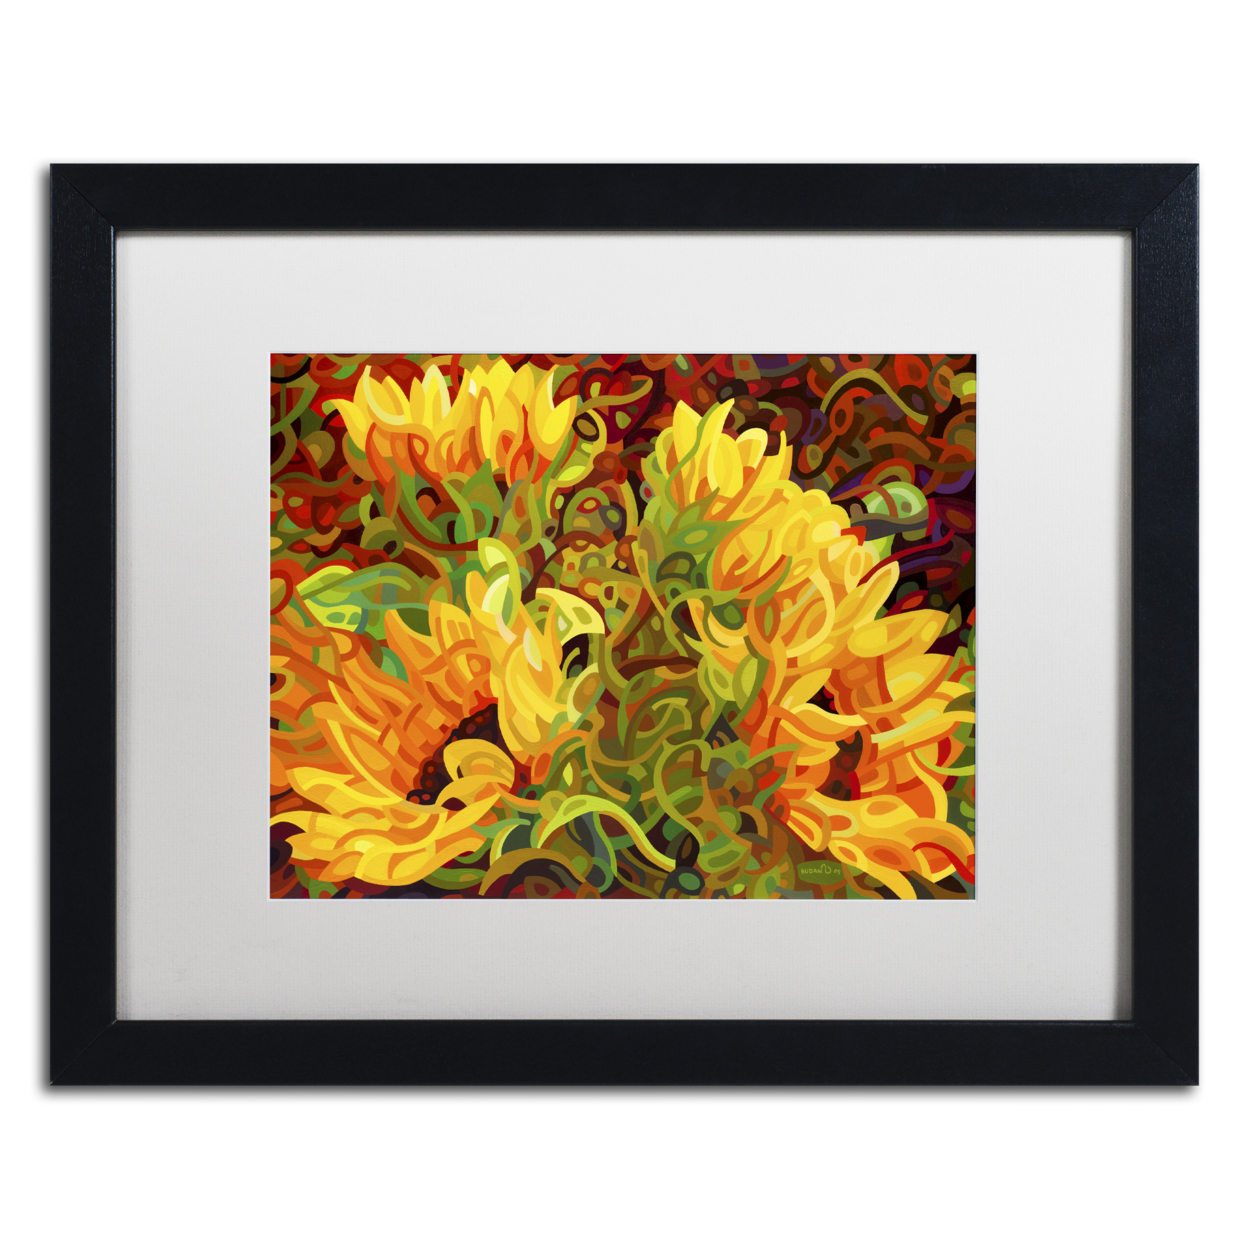 Mandy Budan 'Four Sunflowers' Black Wooden Framed Art 18 X 22 Inches